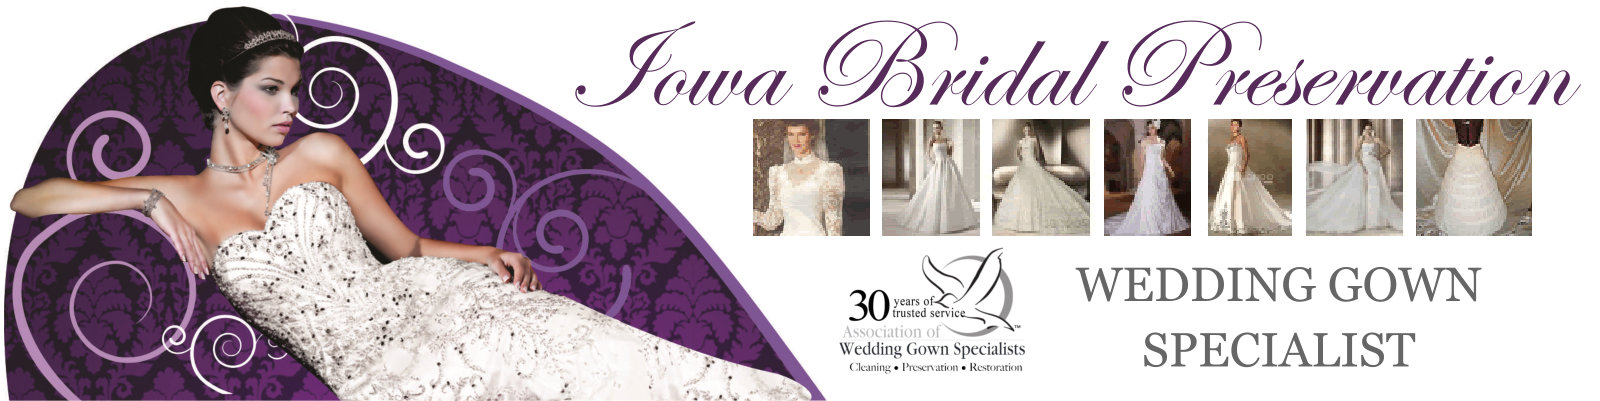 Preservation - Iowa Bridal Preservation